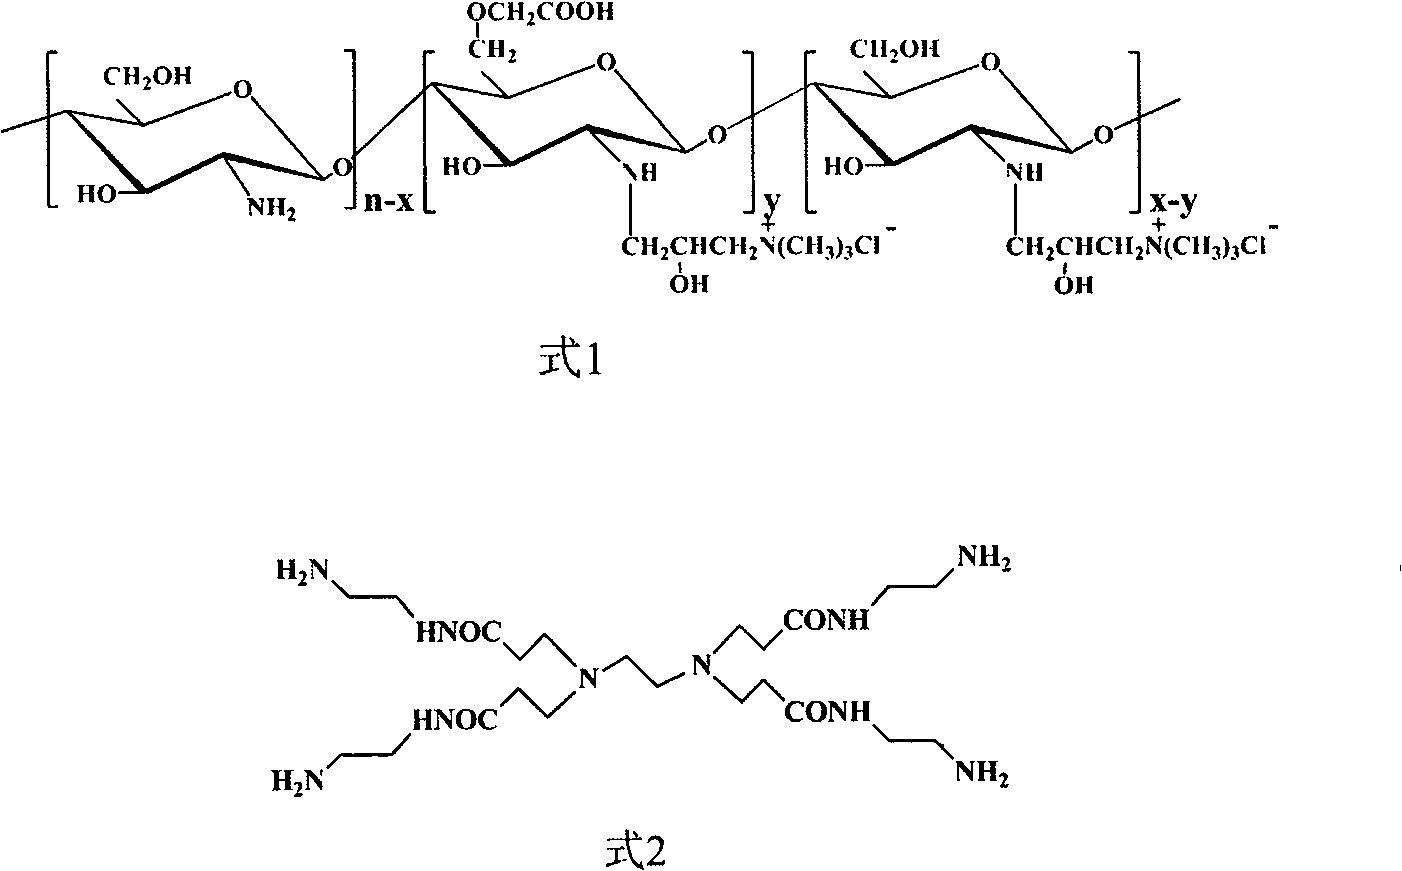 Carboxymethyl chitosan quaternary ammonium salt/PAMAM(Polyamidoamine) core-shell nanoparticles and preparation method